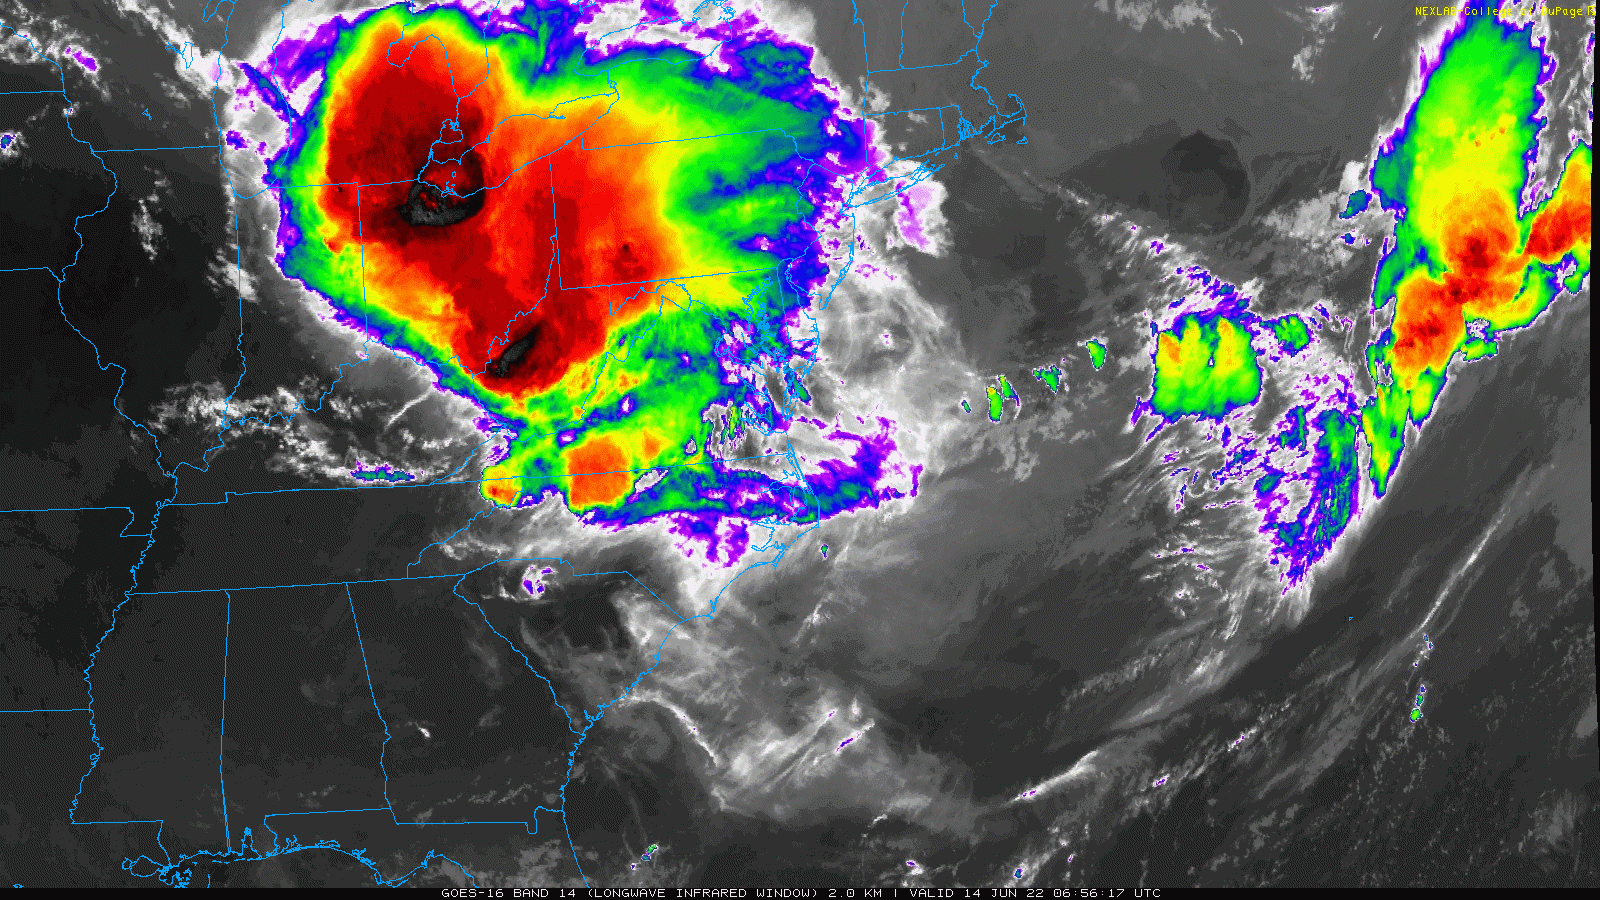 June-14-weather-severe-storm-satellite-am-4